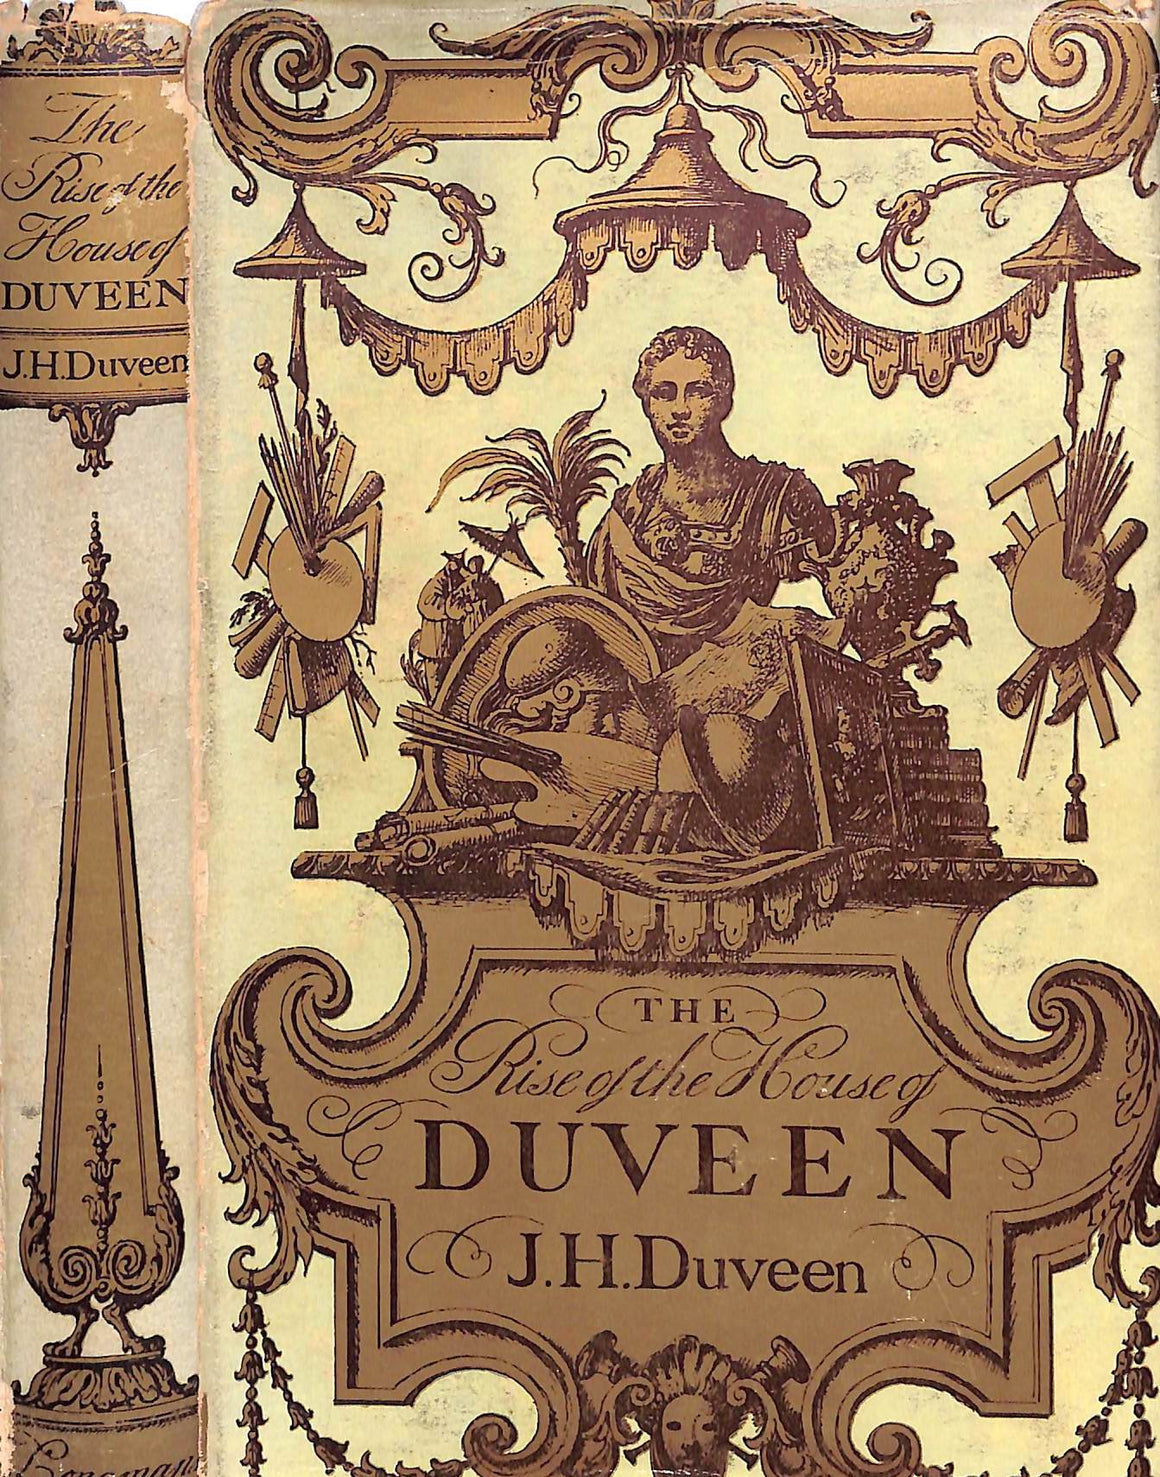 "The Rise Of The House Of Duveen" 1957 DUVEEN, J.H.